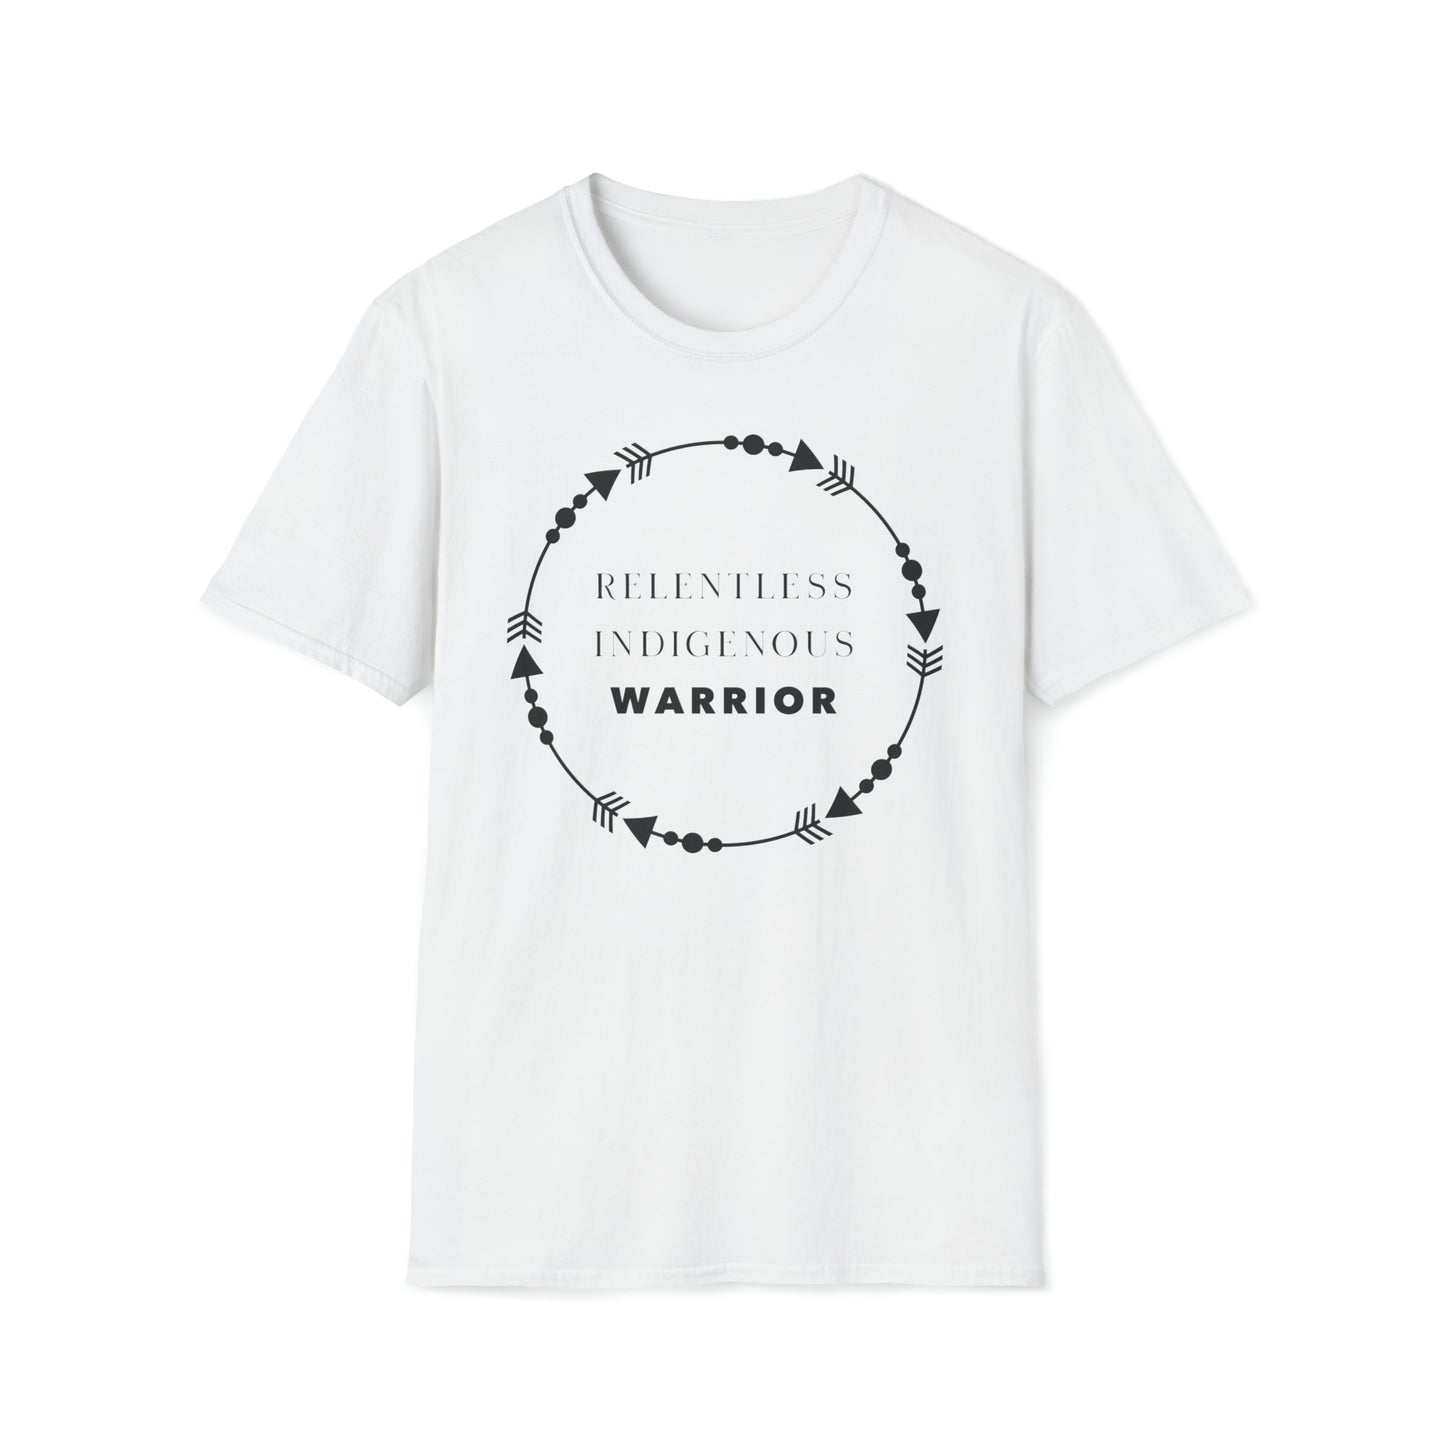 Relentless Indigenous Warrior // T-Shirt